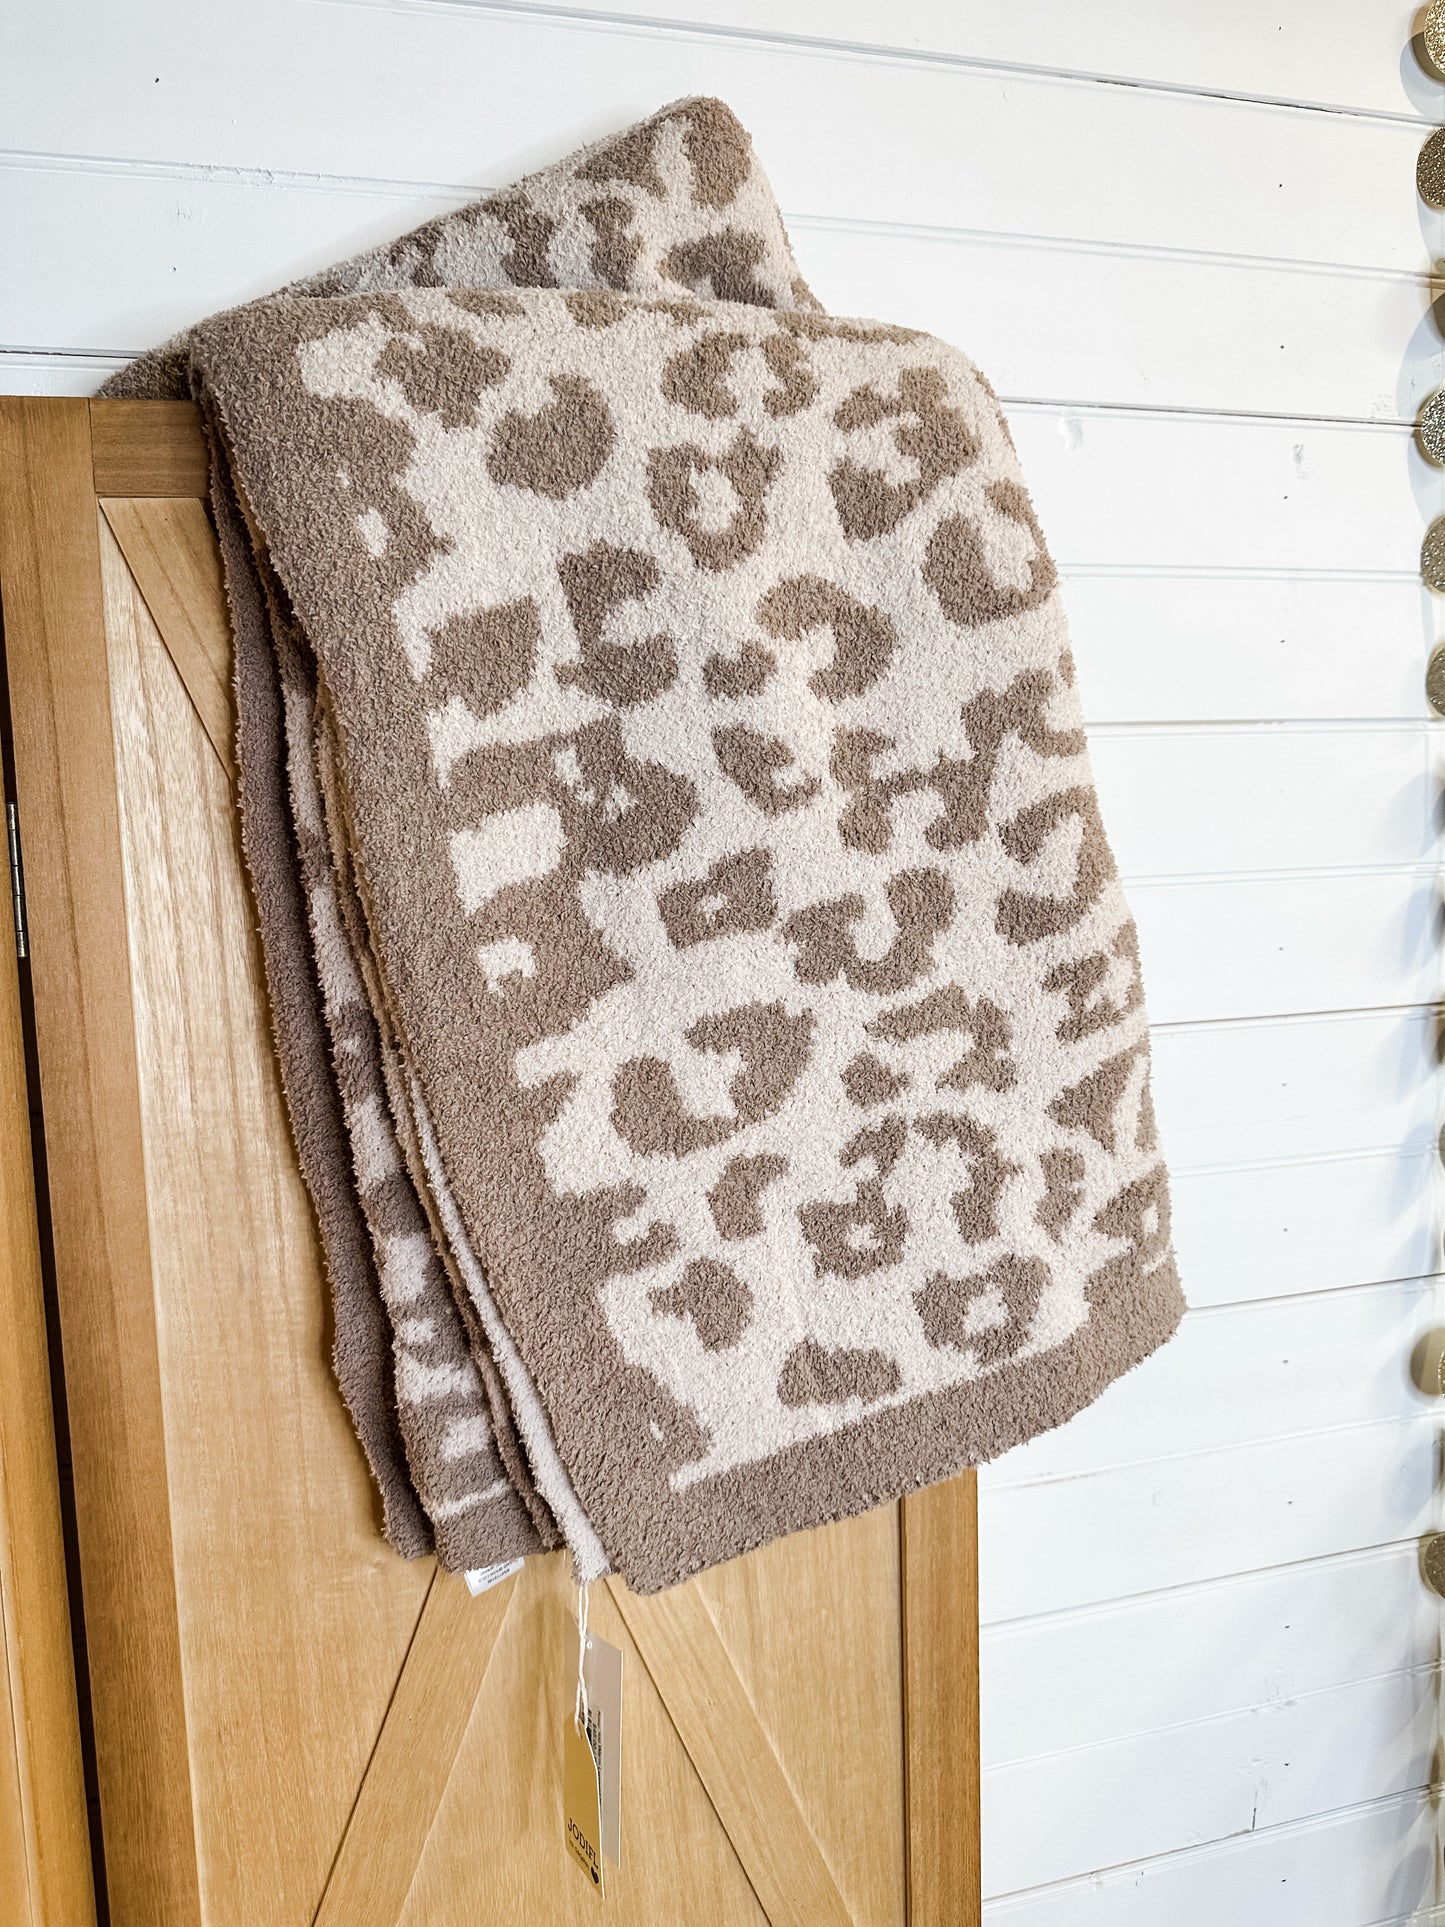 Keep You Warm Leopard Blanket